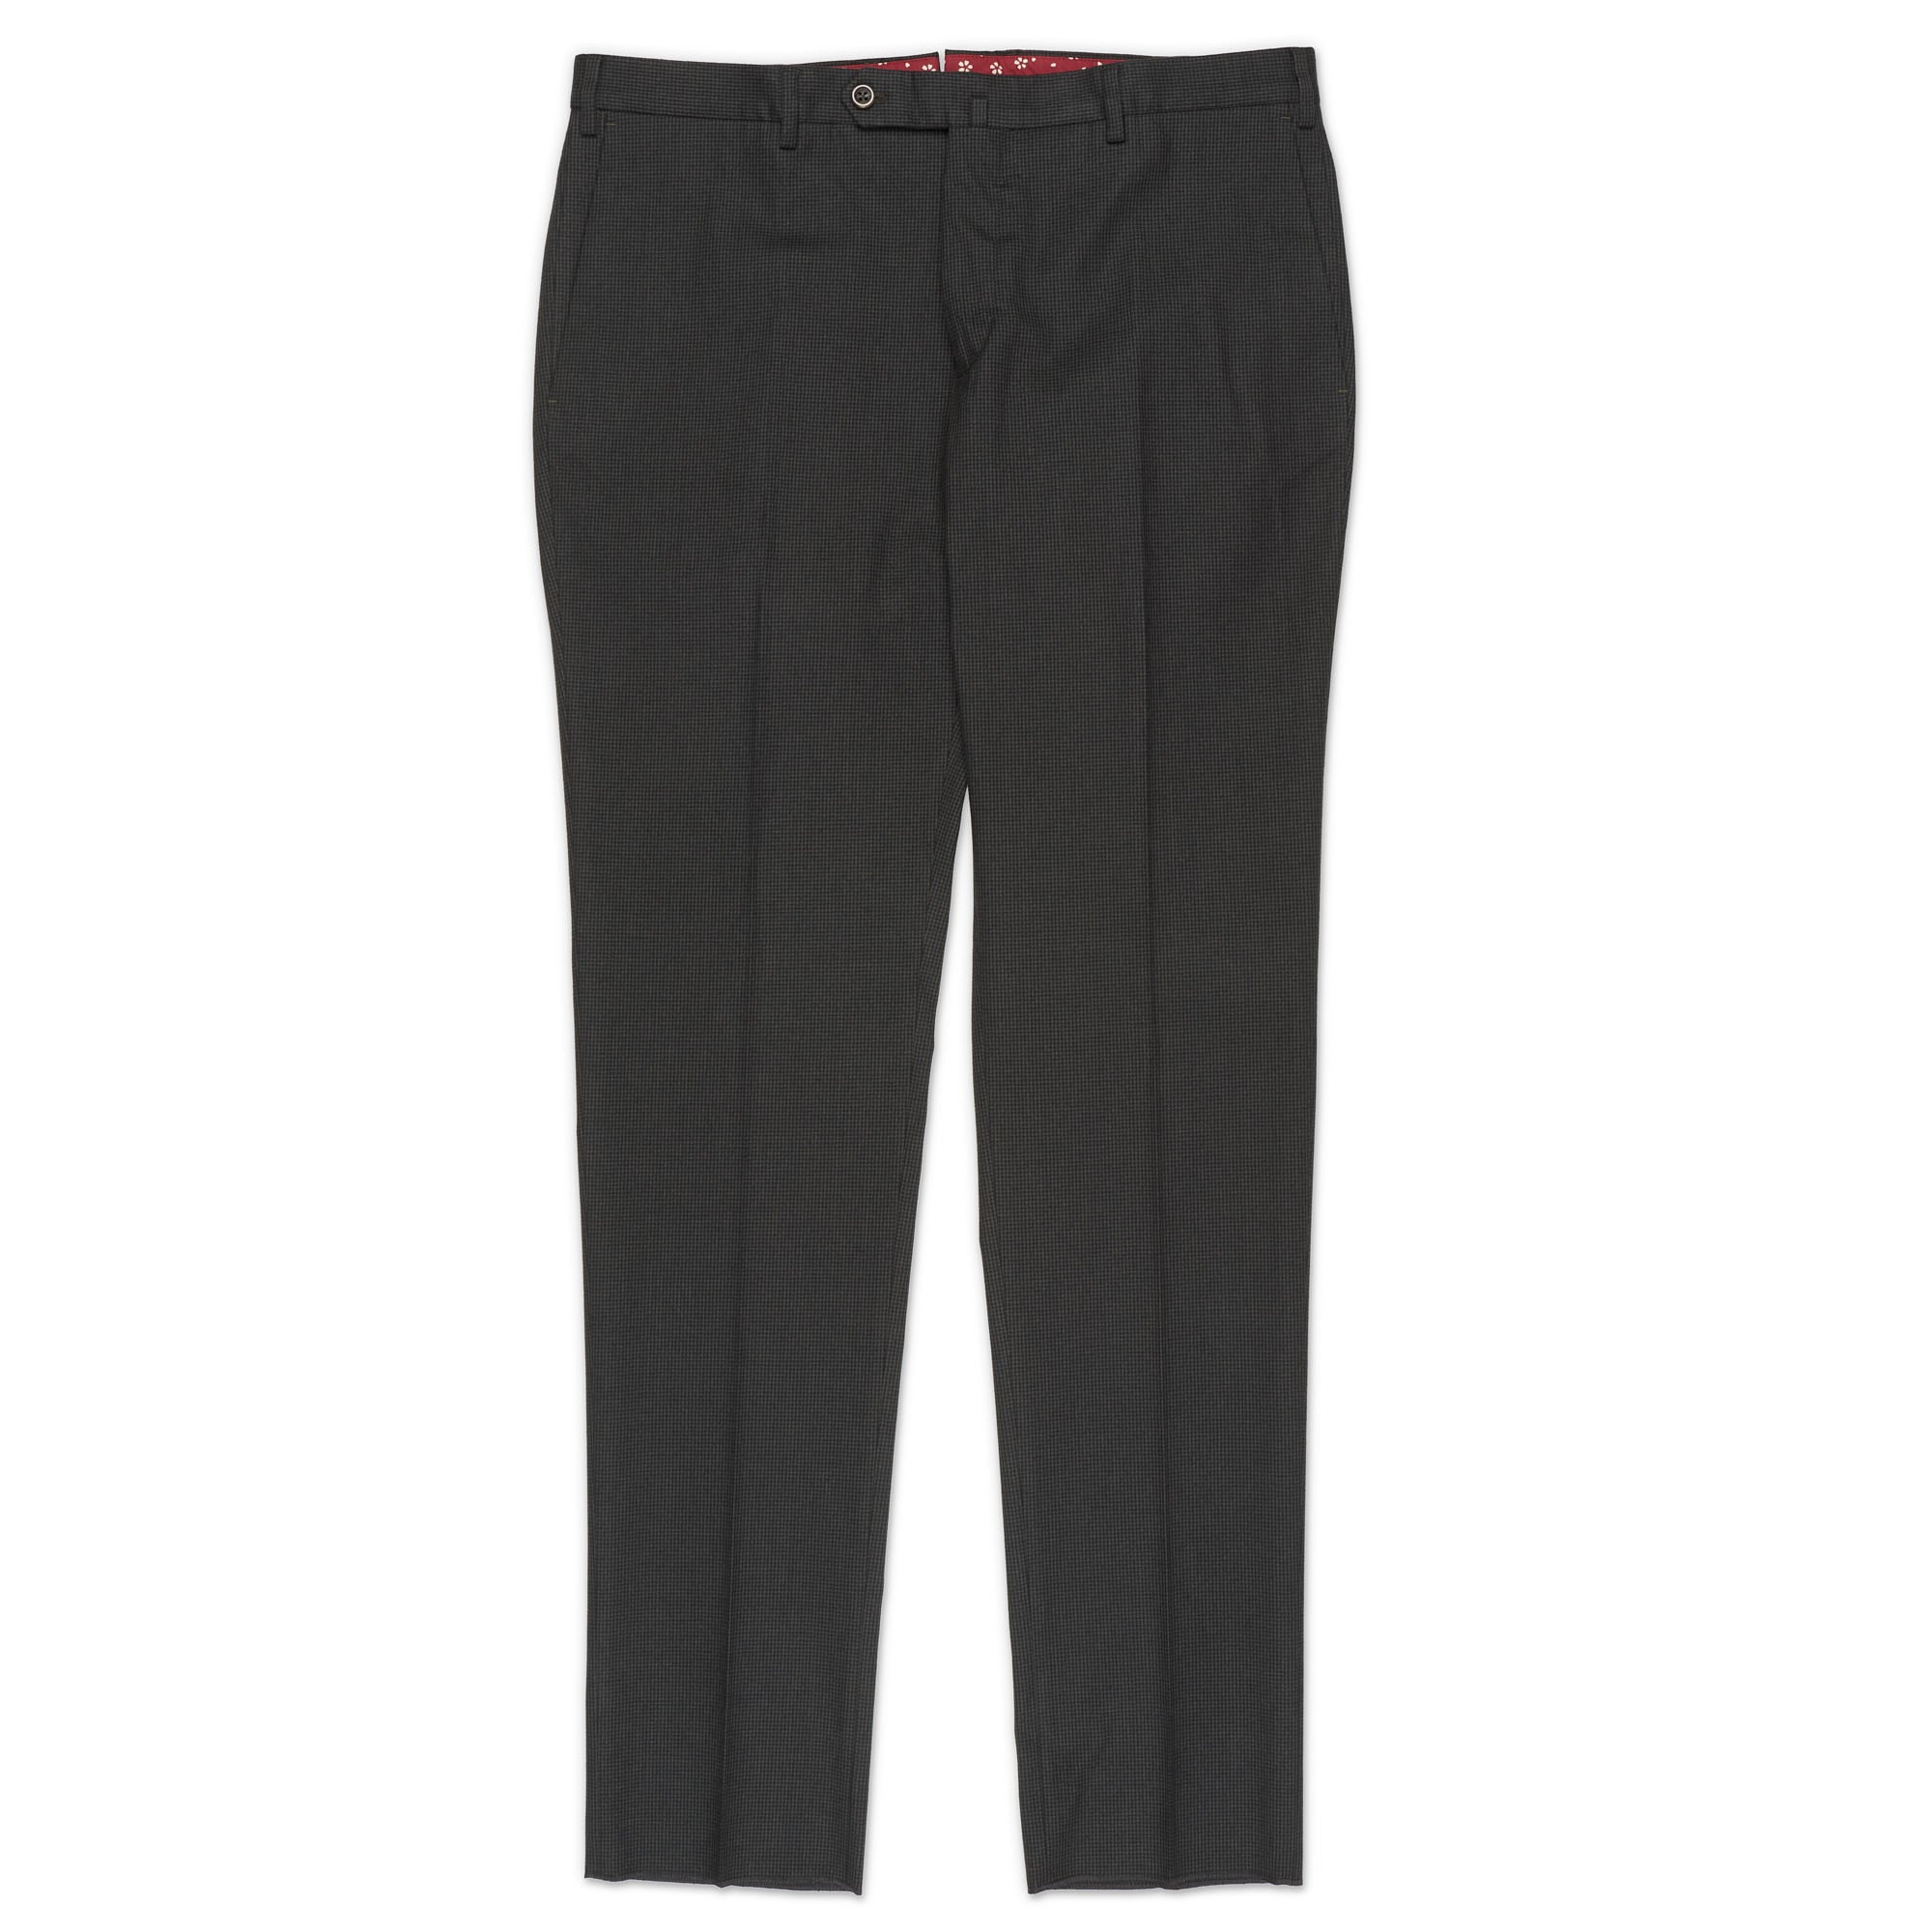 INCOTEX (Slowear) Green Patterned Cotton Flat Front Pants 54 NEW US 38 Slim Fit INCOTEX